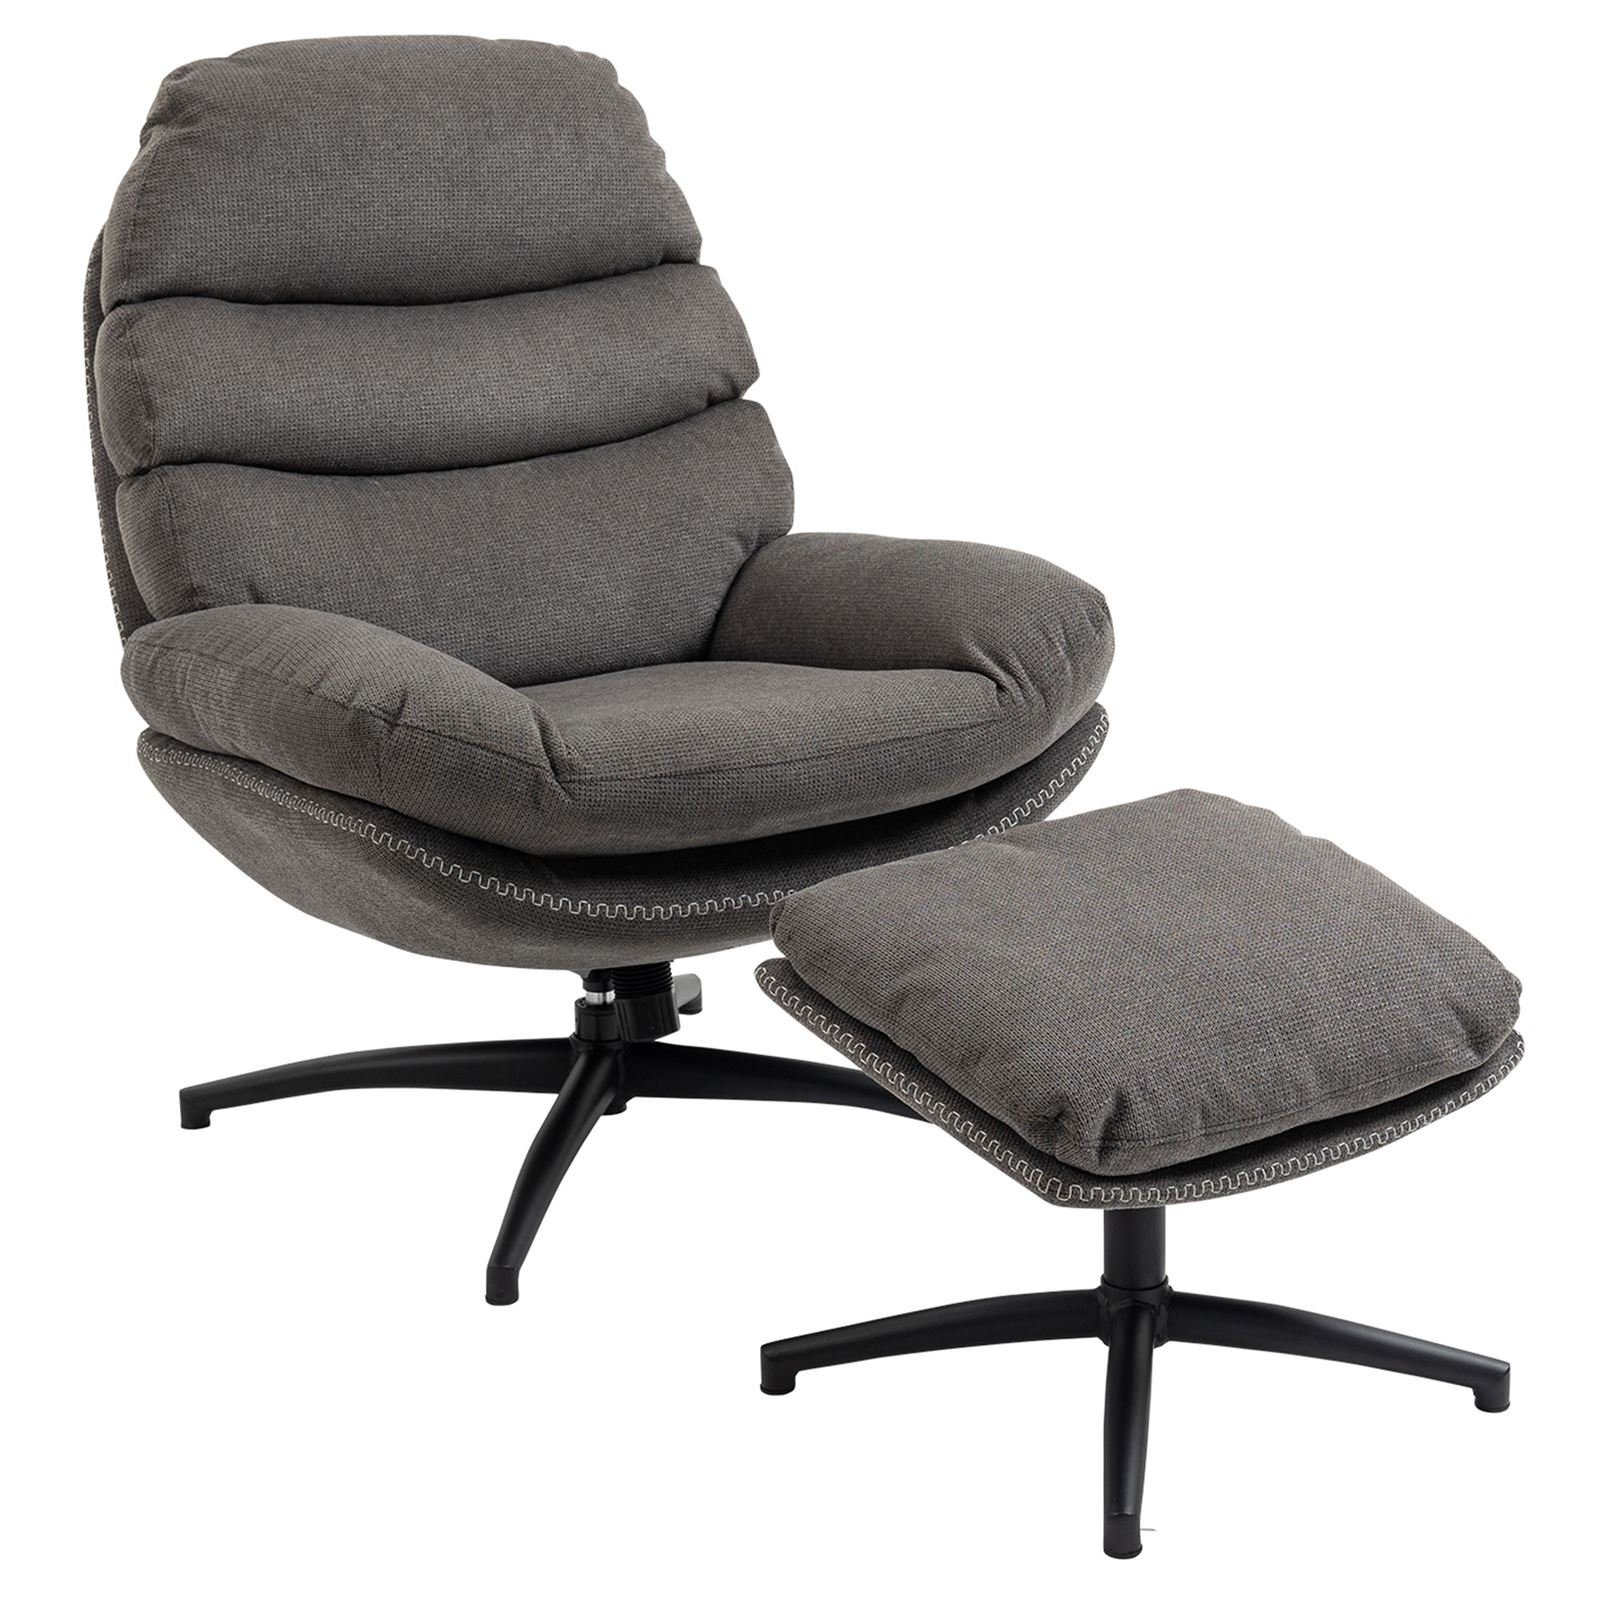 CARO-Möbel Relaxsessel, Relaxsessel mit Hocker Polstersessel Wohnzimmer Fernseh Metall Stoff M grau